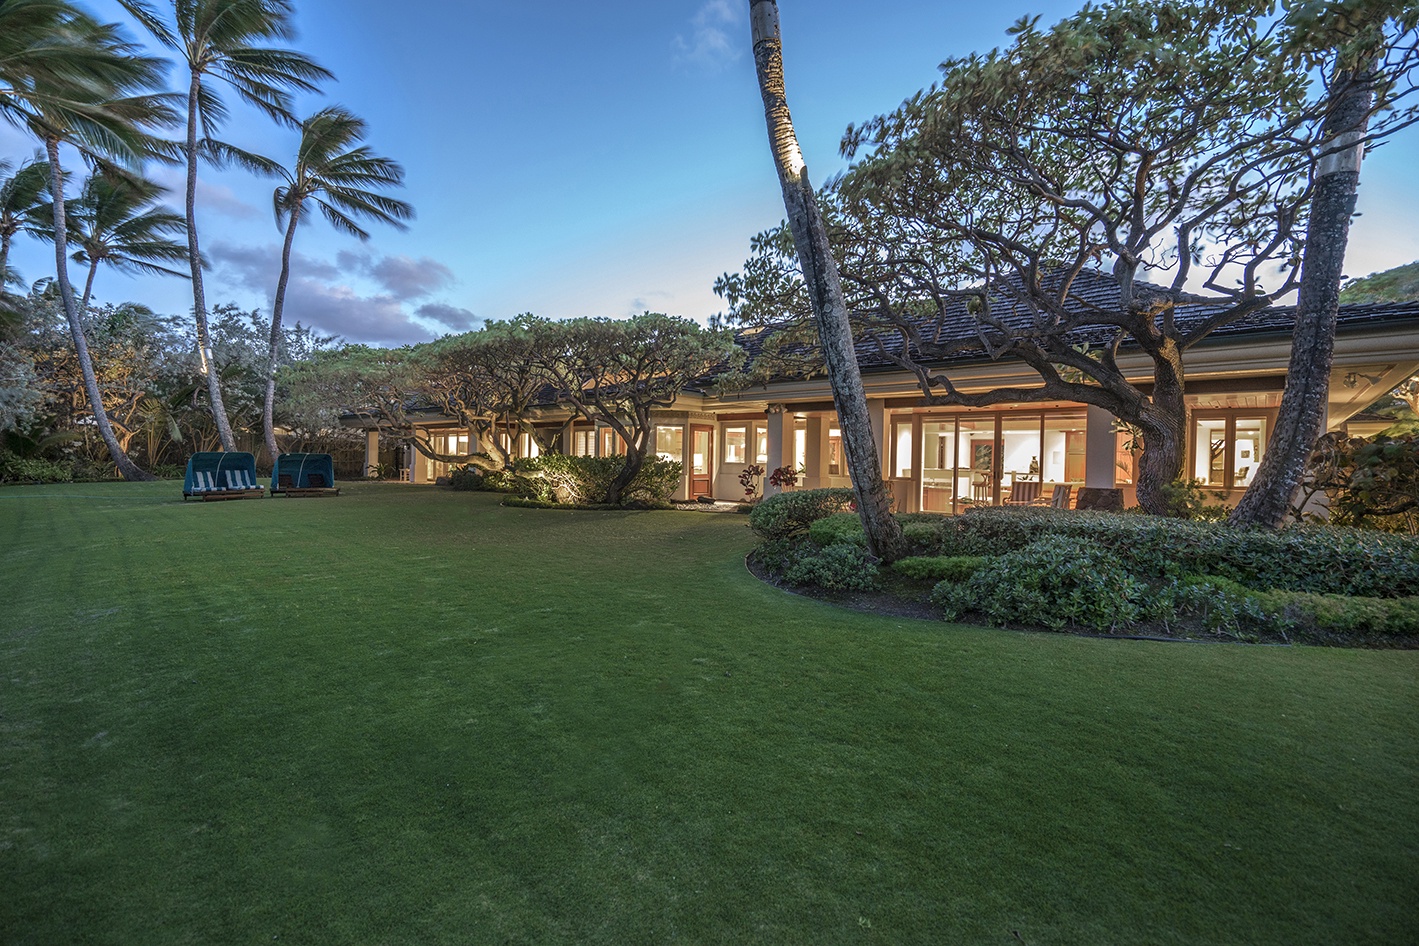 Kailua Vacation Rentals, Kailua's Kai Moena Estate - Guest house: Beach side lawn